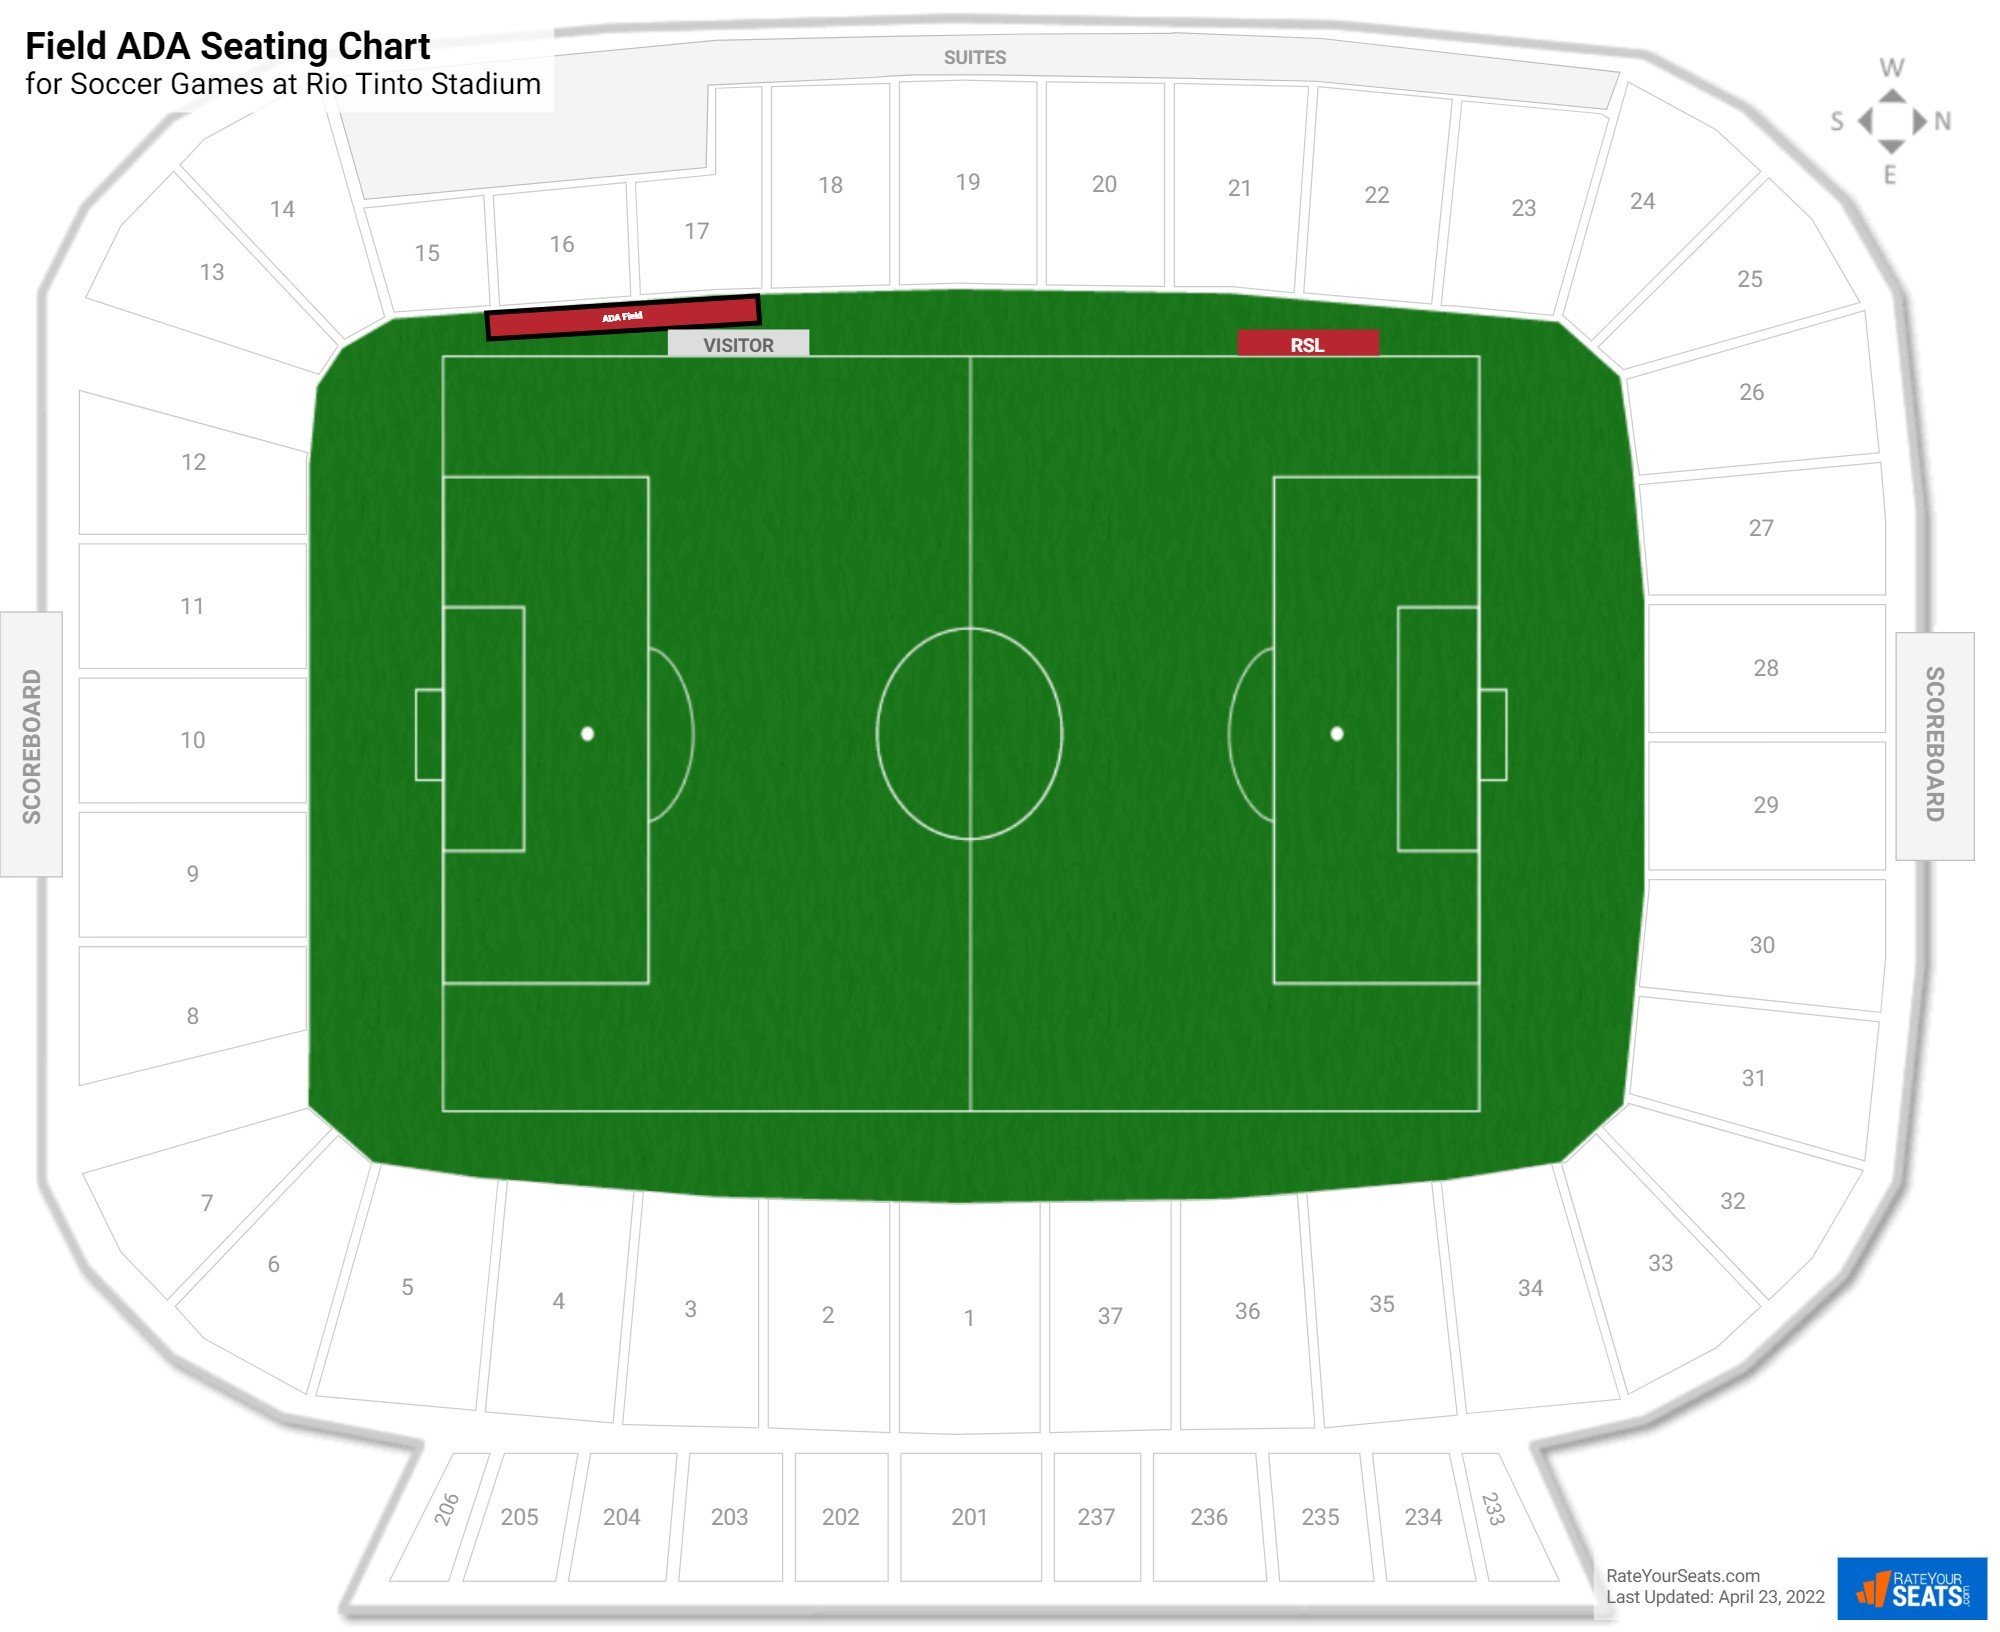 Soccer Field ADA Seating Chart at Rio Tinto Stadium